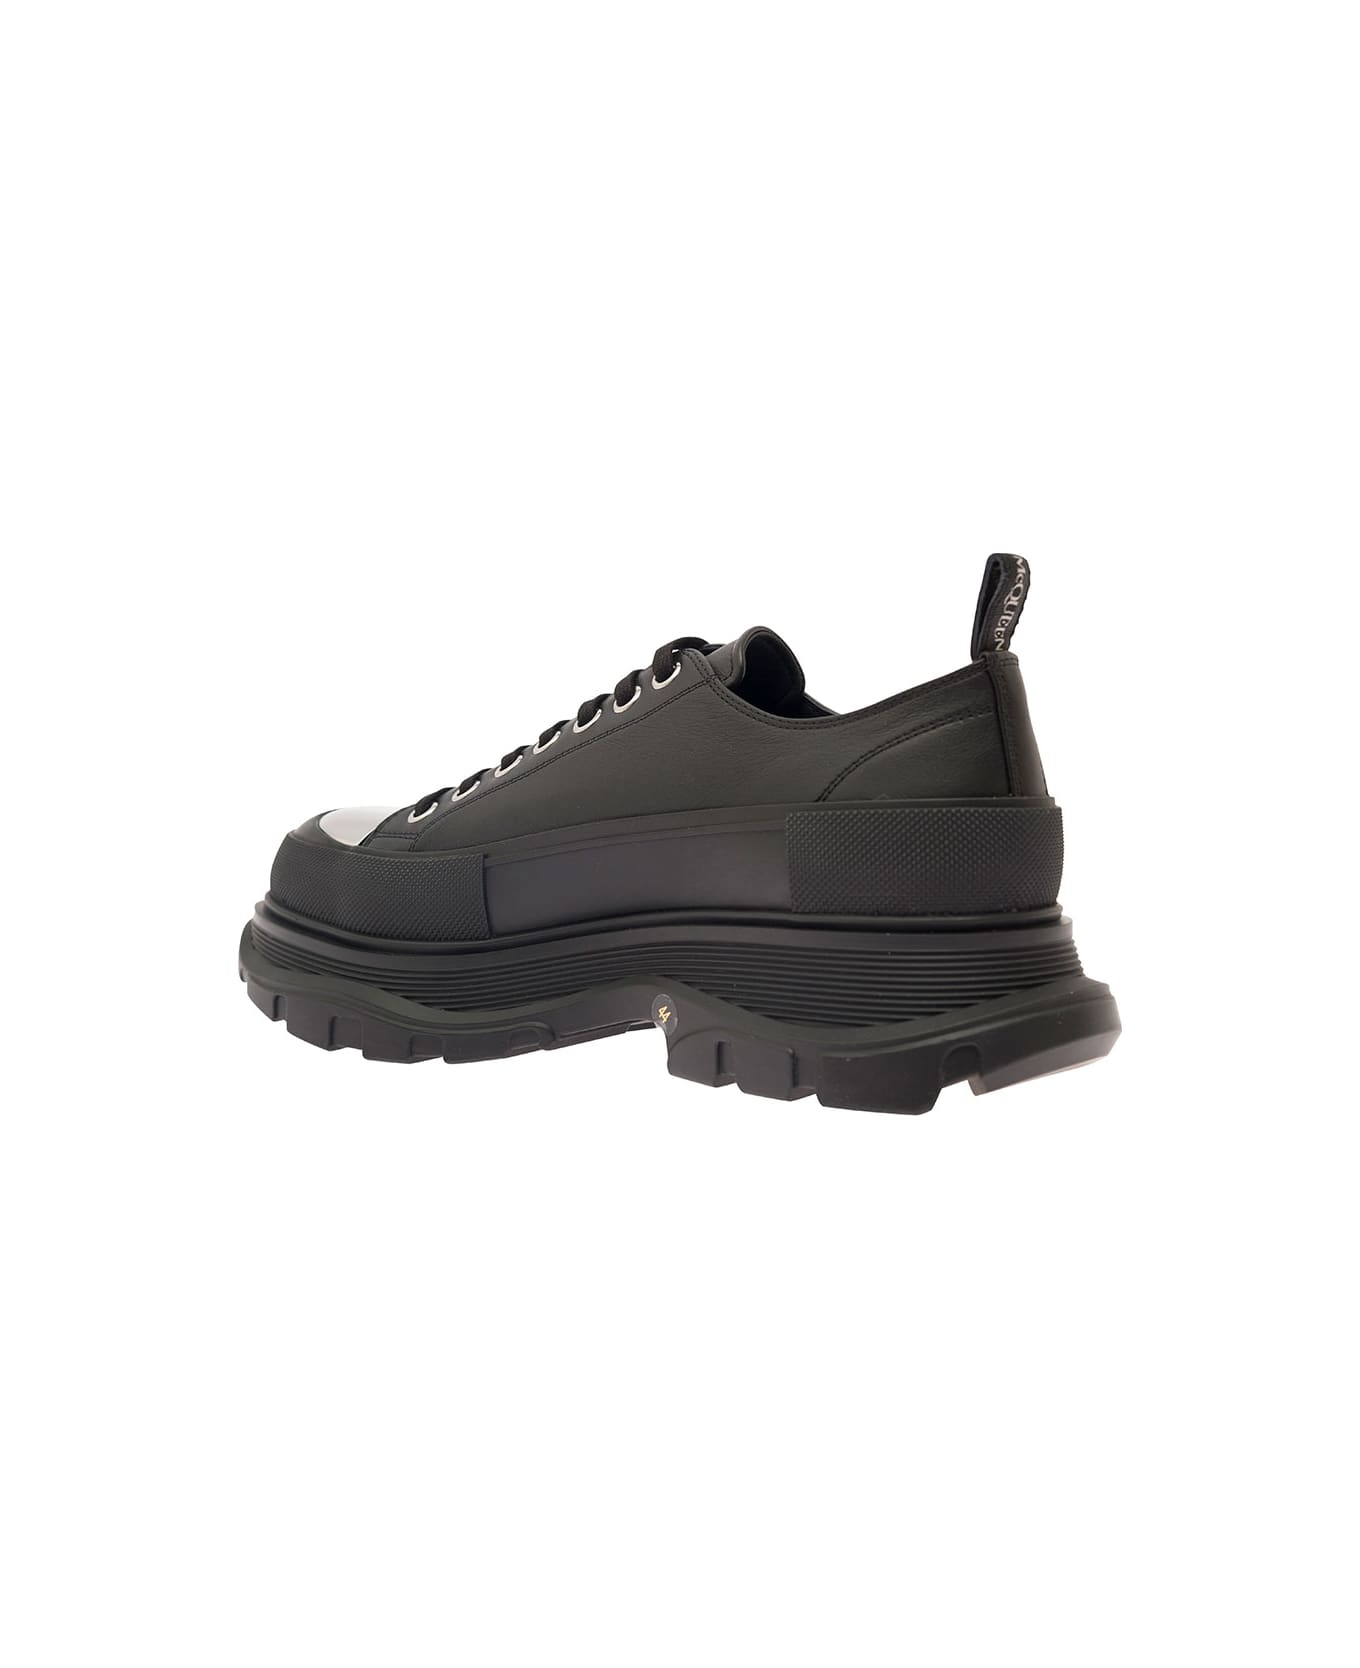 Alexander McQueen 'trade Slick' Black Sneakers With Oversized Platform And Metallic Toe In Leather Man - Black スニーカー